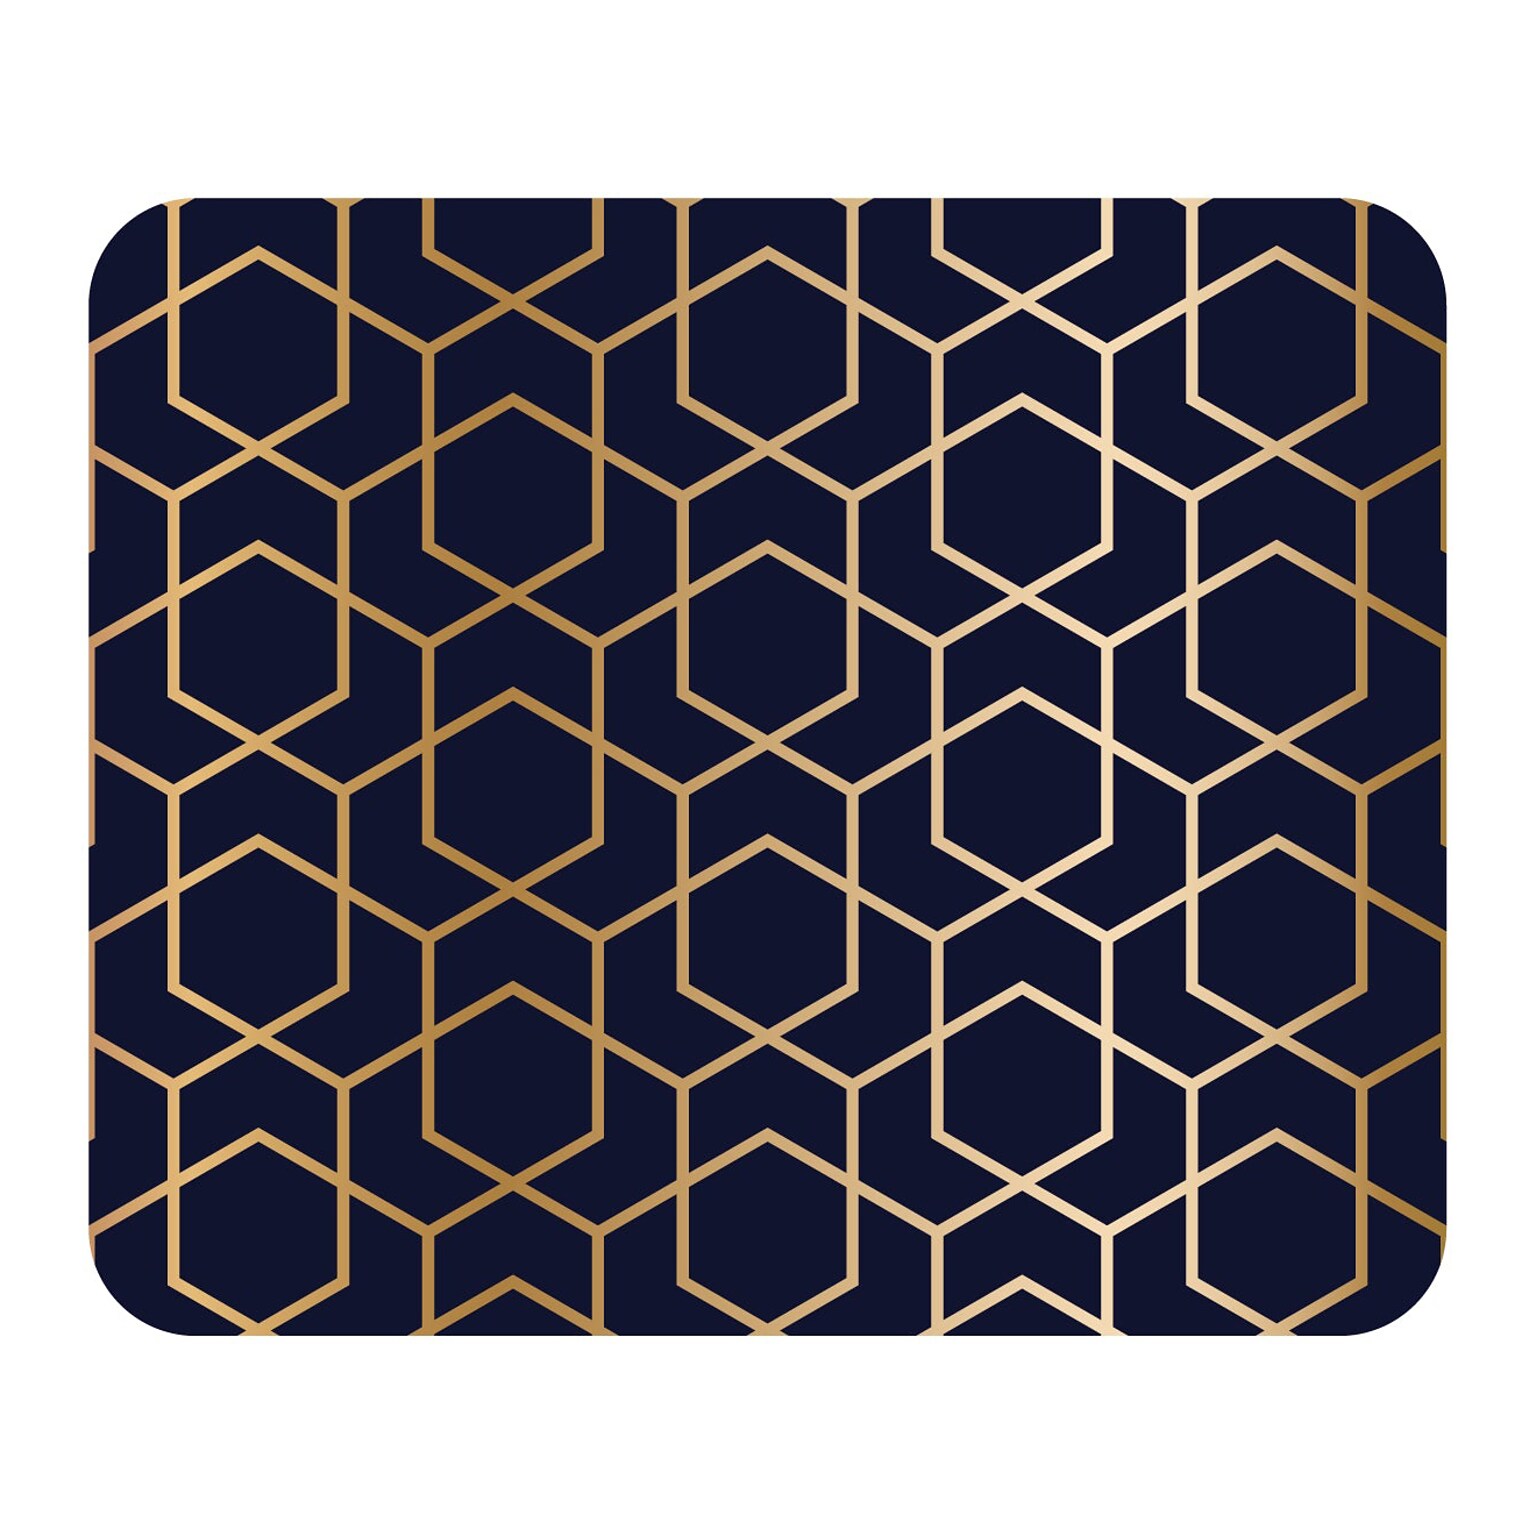 OTM Essentials Prints Series Golden Hexagrams Non-Skid Mouse Pad, Black/Gold (OP-MH-Z119A)